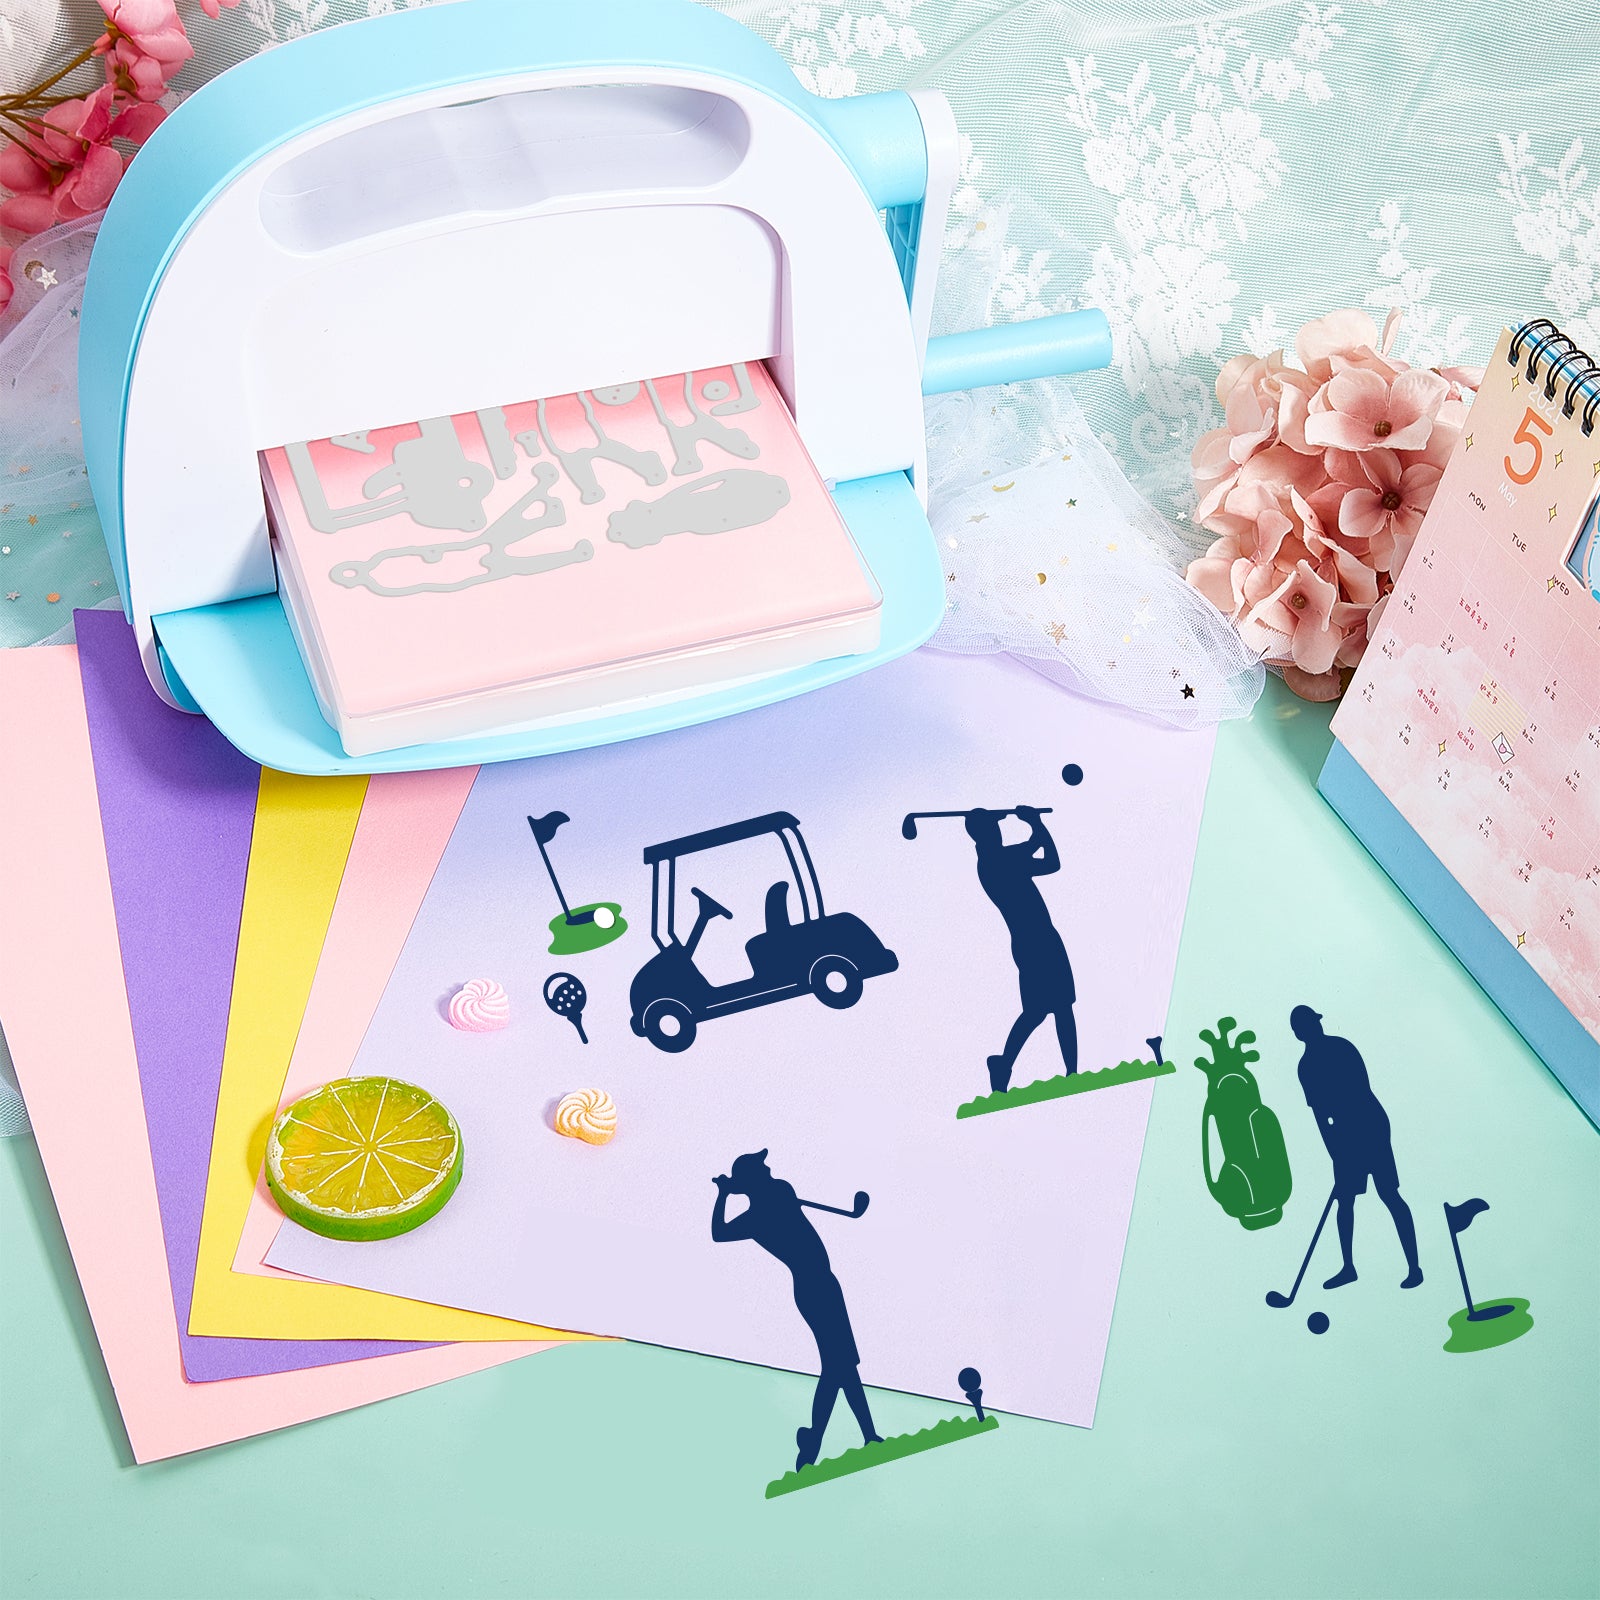 Globleland Golf, Sport, Golf Ball, Clubs, Lawn, Cart, Bag Carbon Steel Cutting Dies Stencils, for DIY Scrapbooking/Photo Album, Decorative Embossing DIY Paper Card